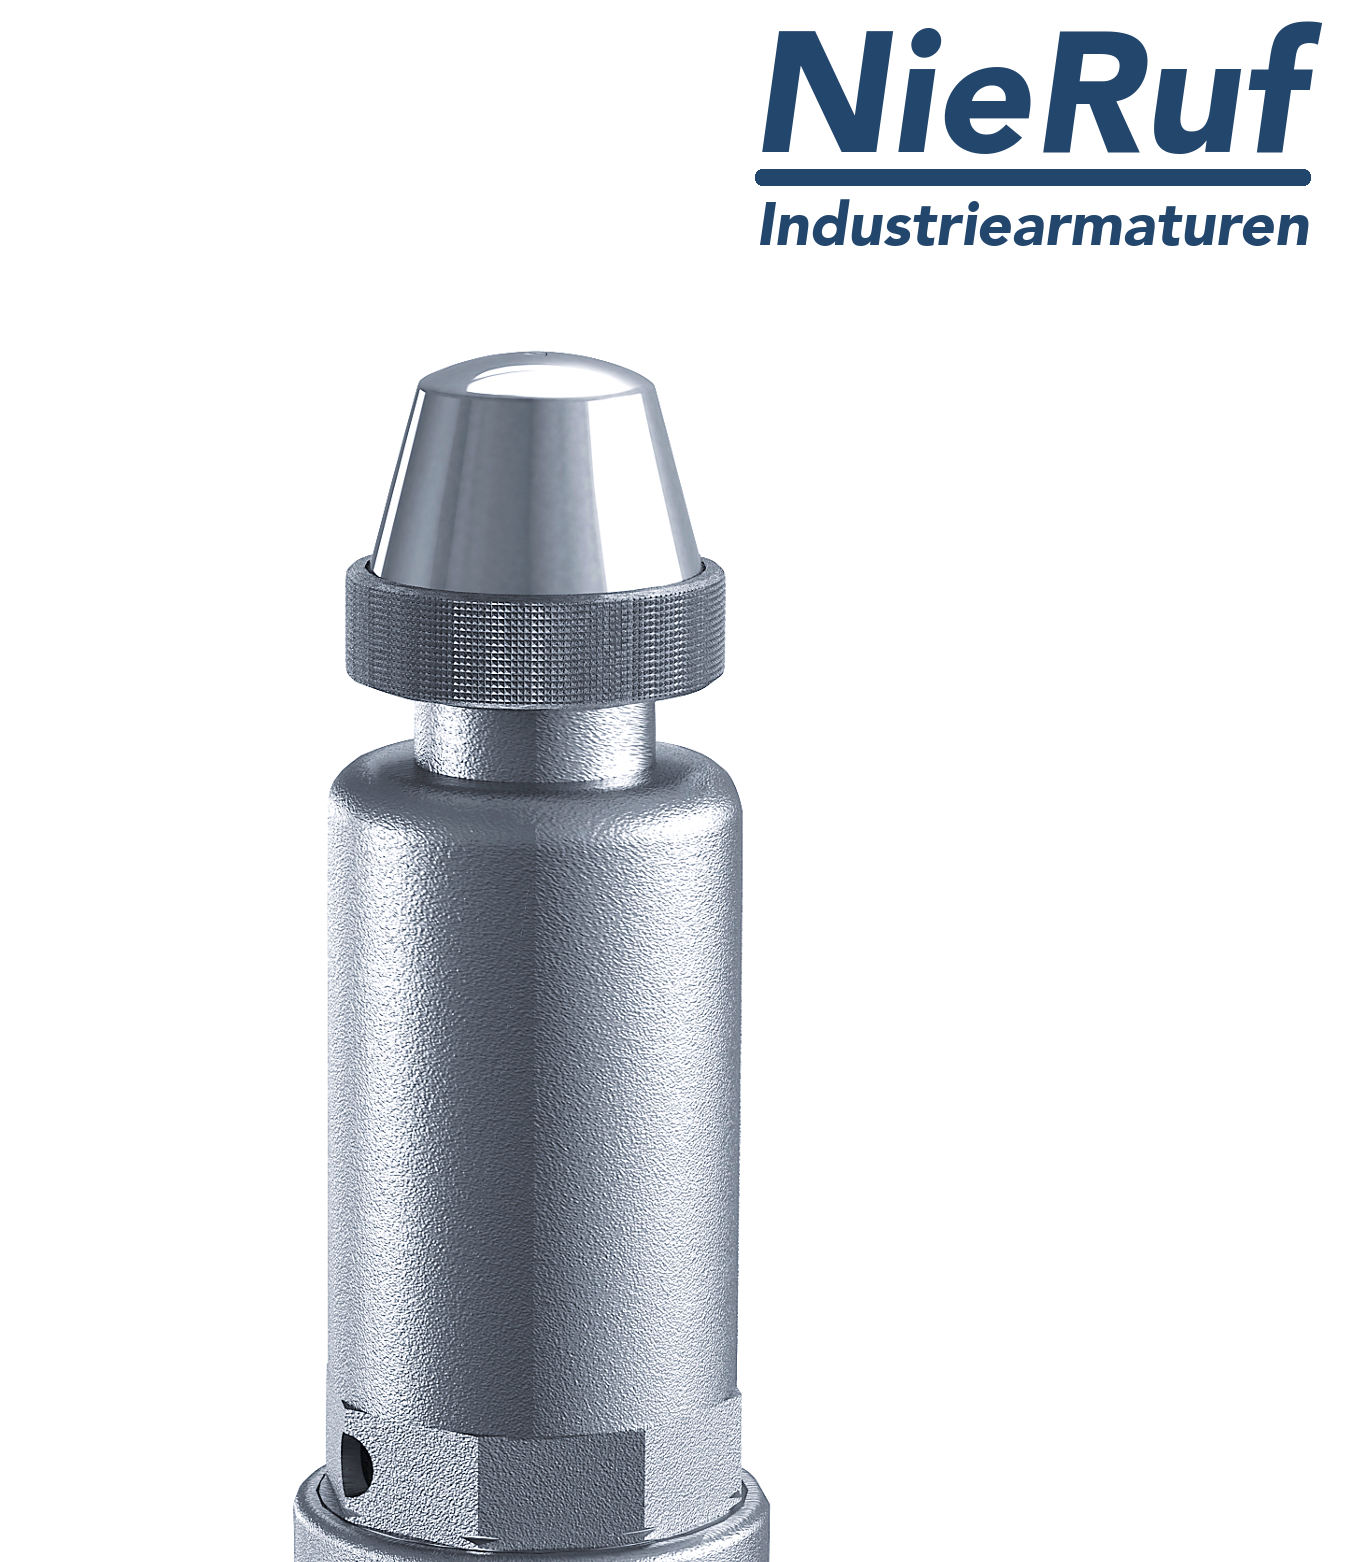 safety valve 3/4" x 1 1/4" fm SV09 neutral gaseous media, stainless steel EPDM